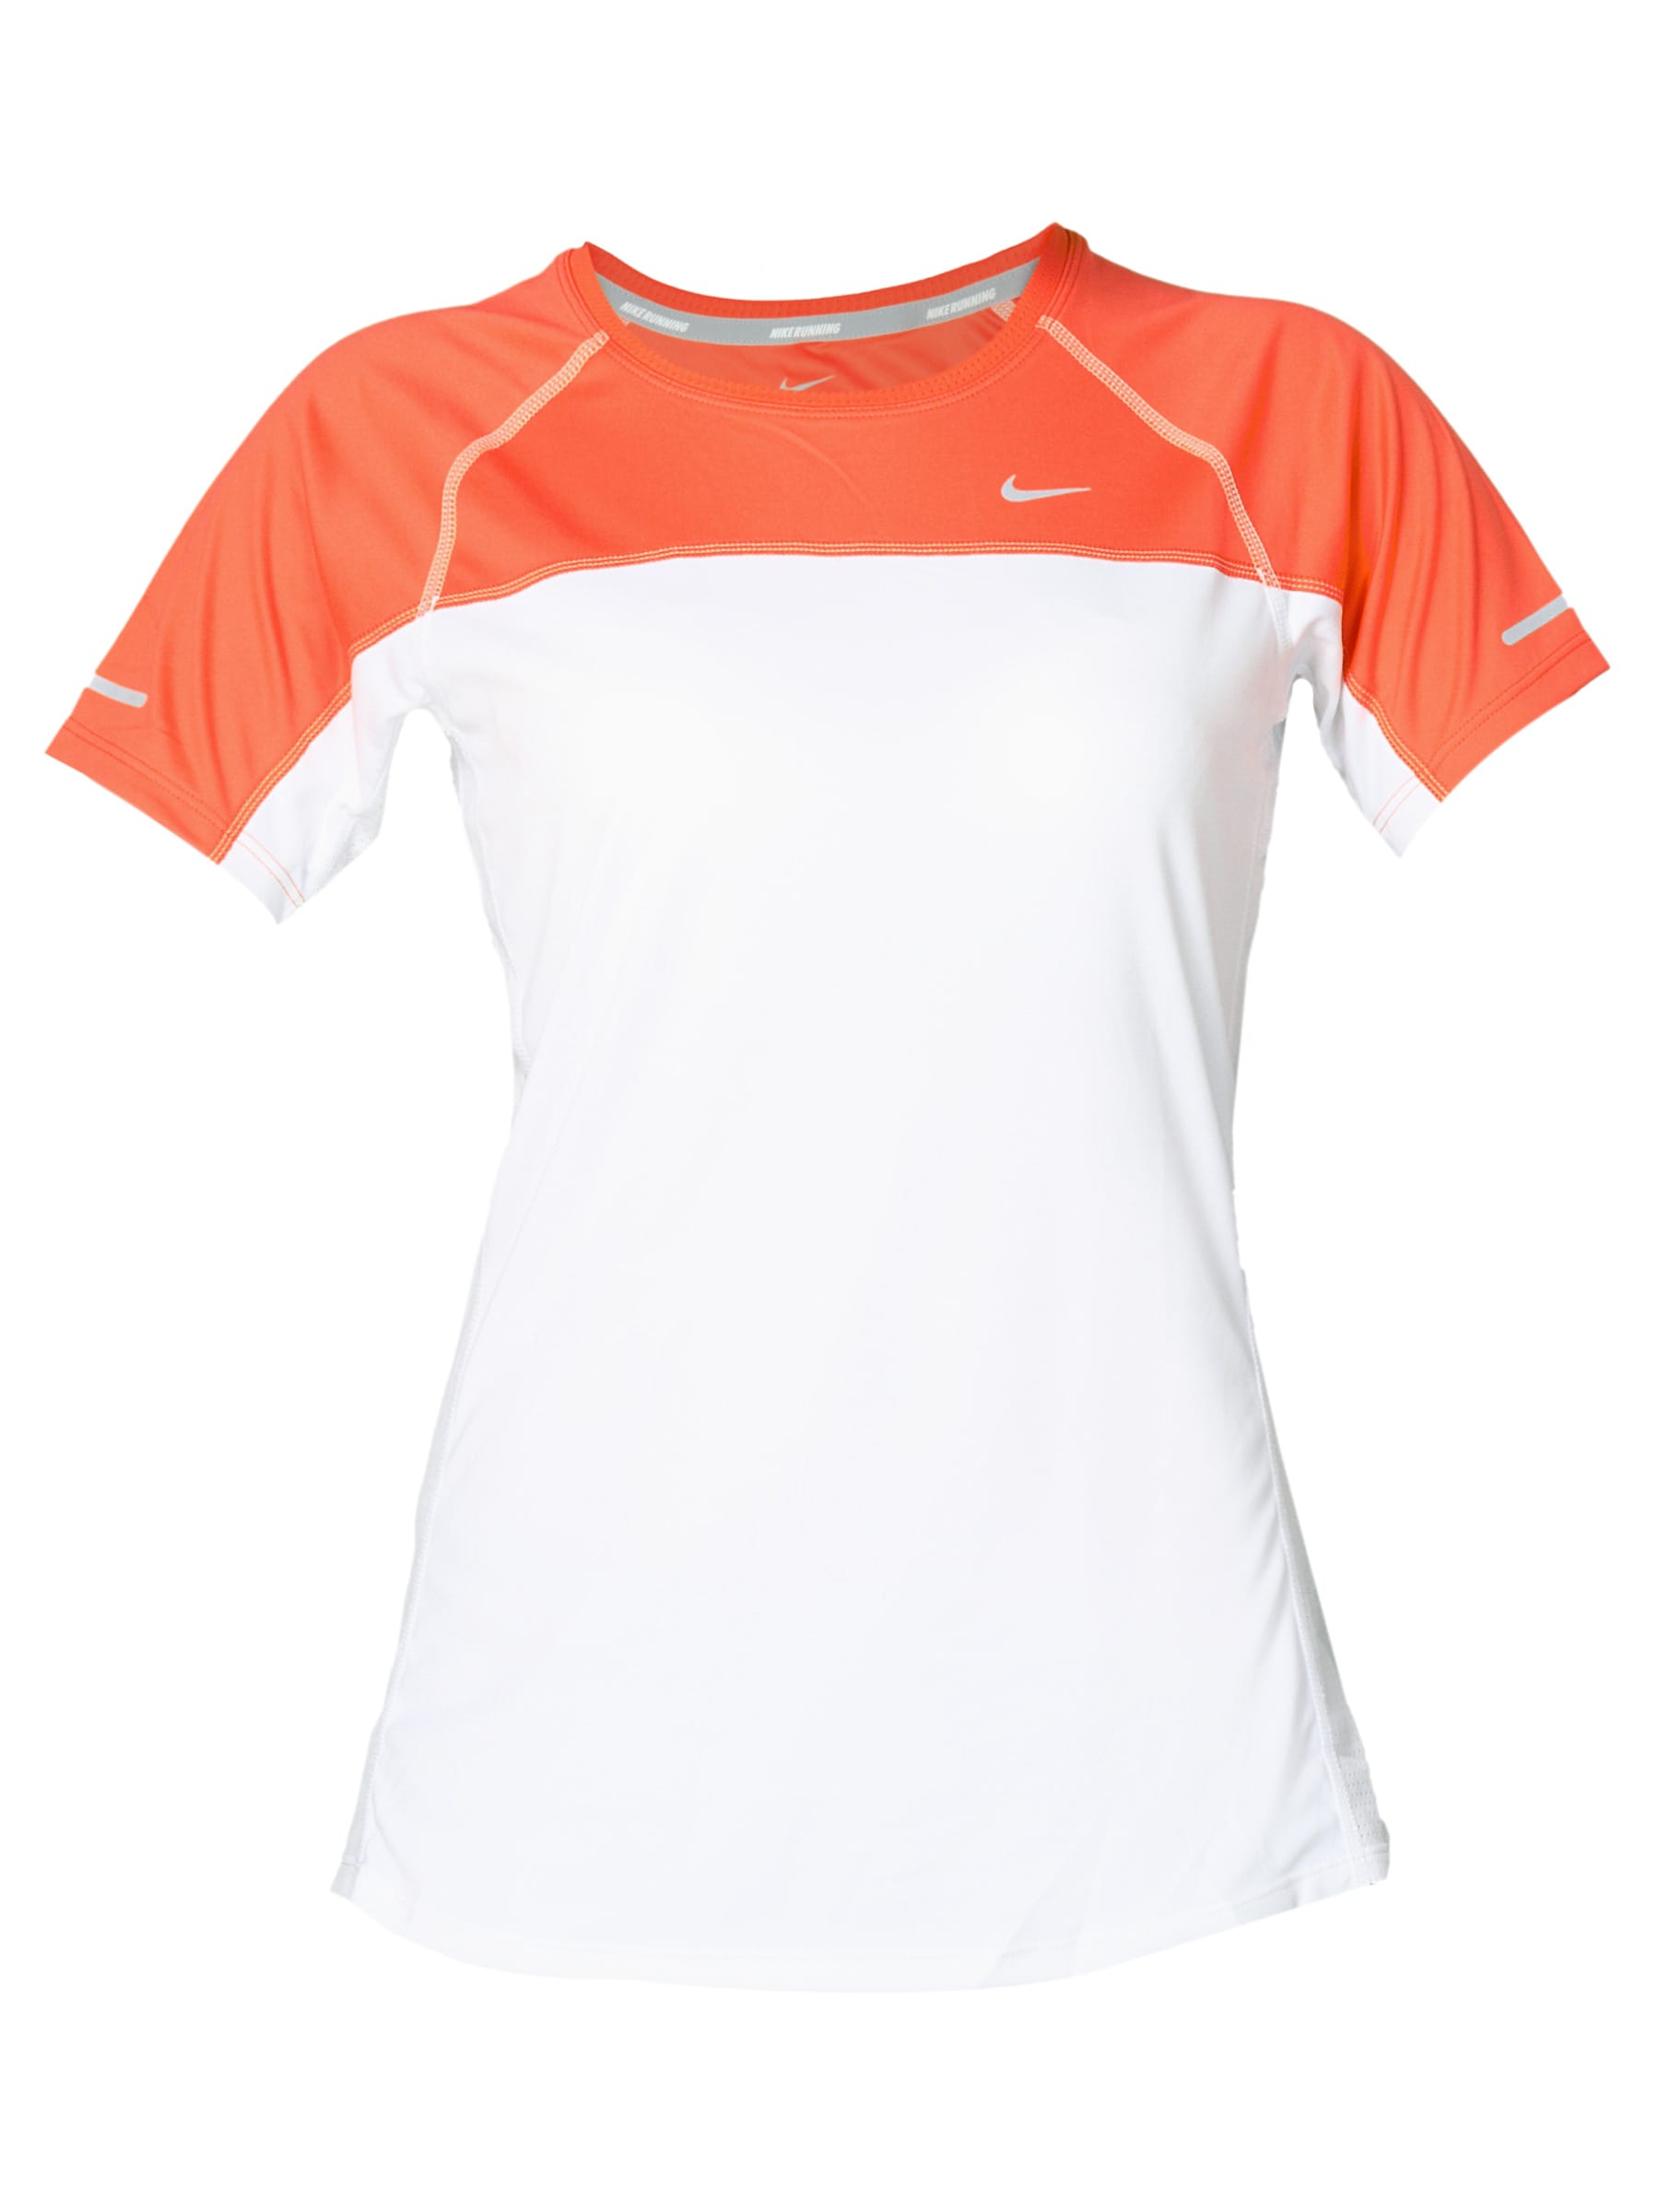 Nike Women's Miler Orange White T-shirt